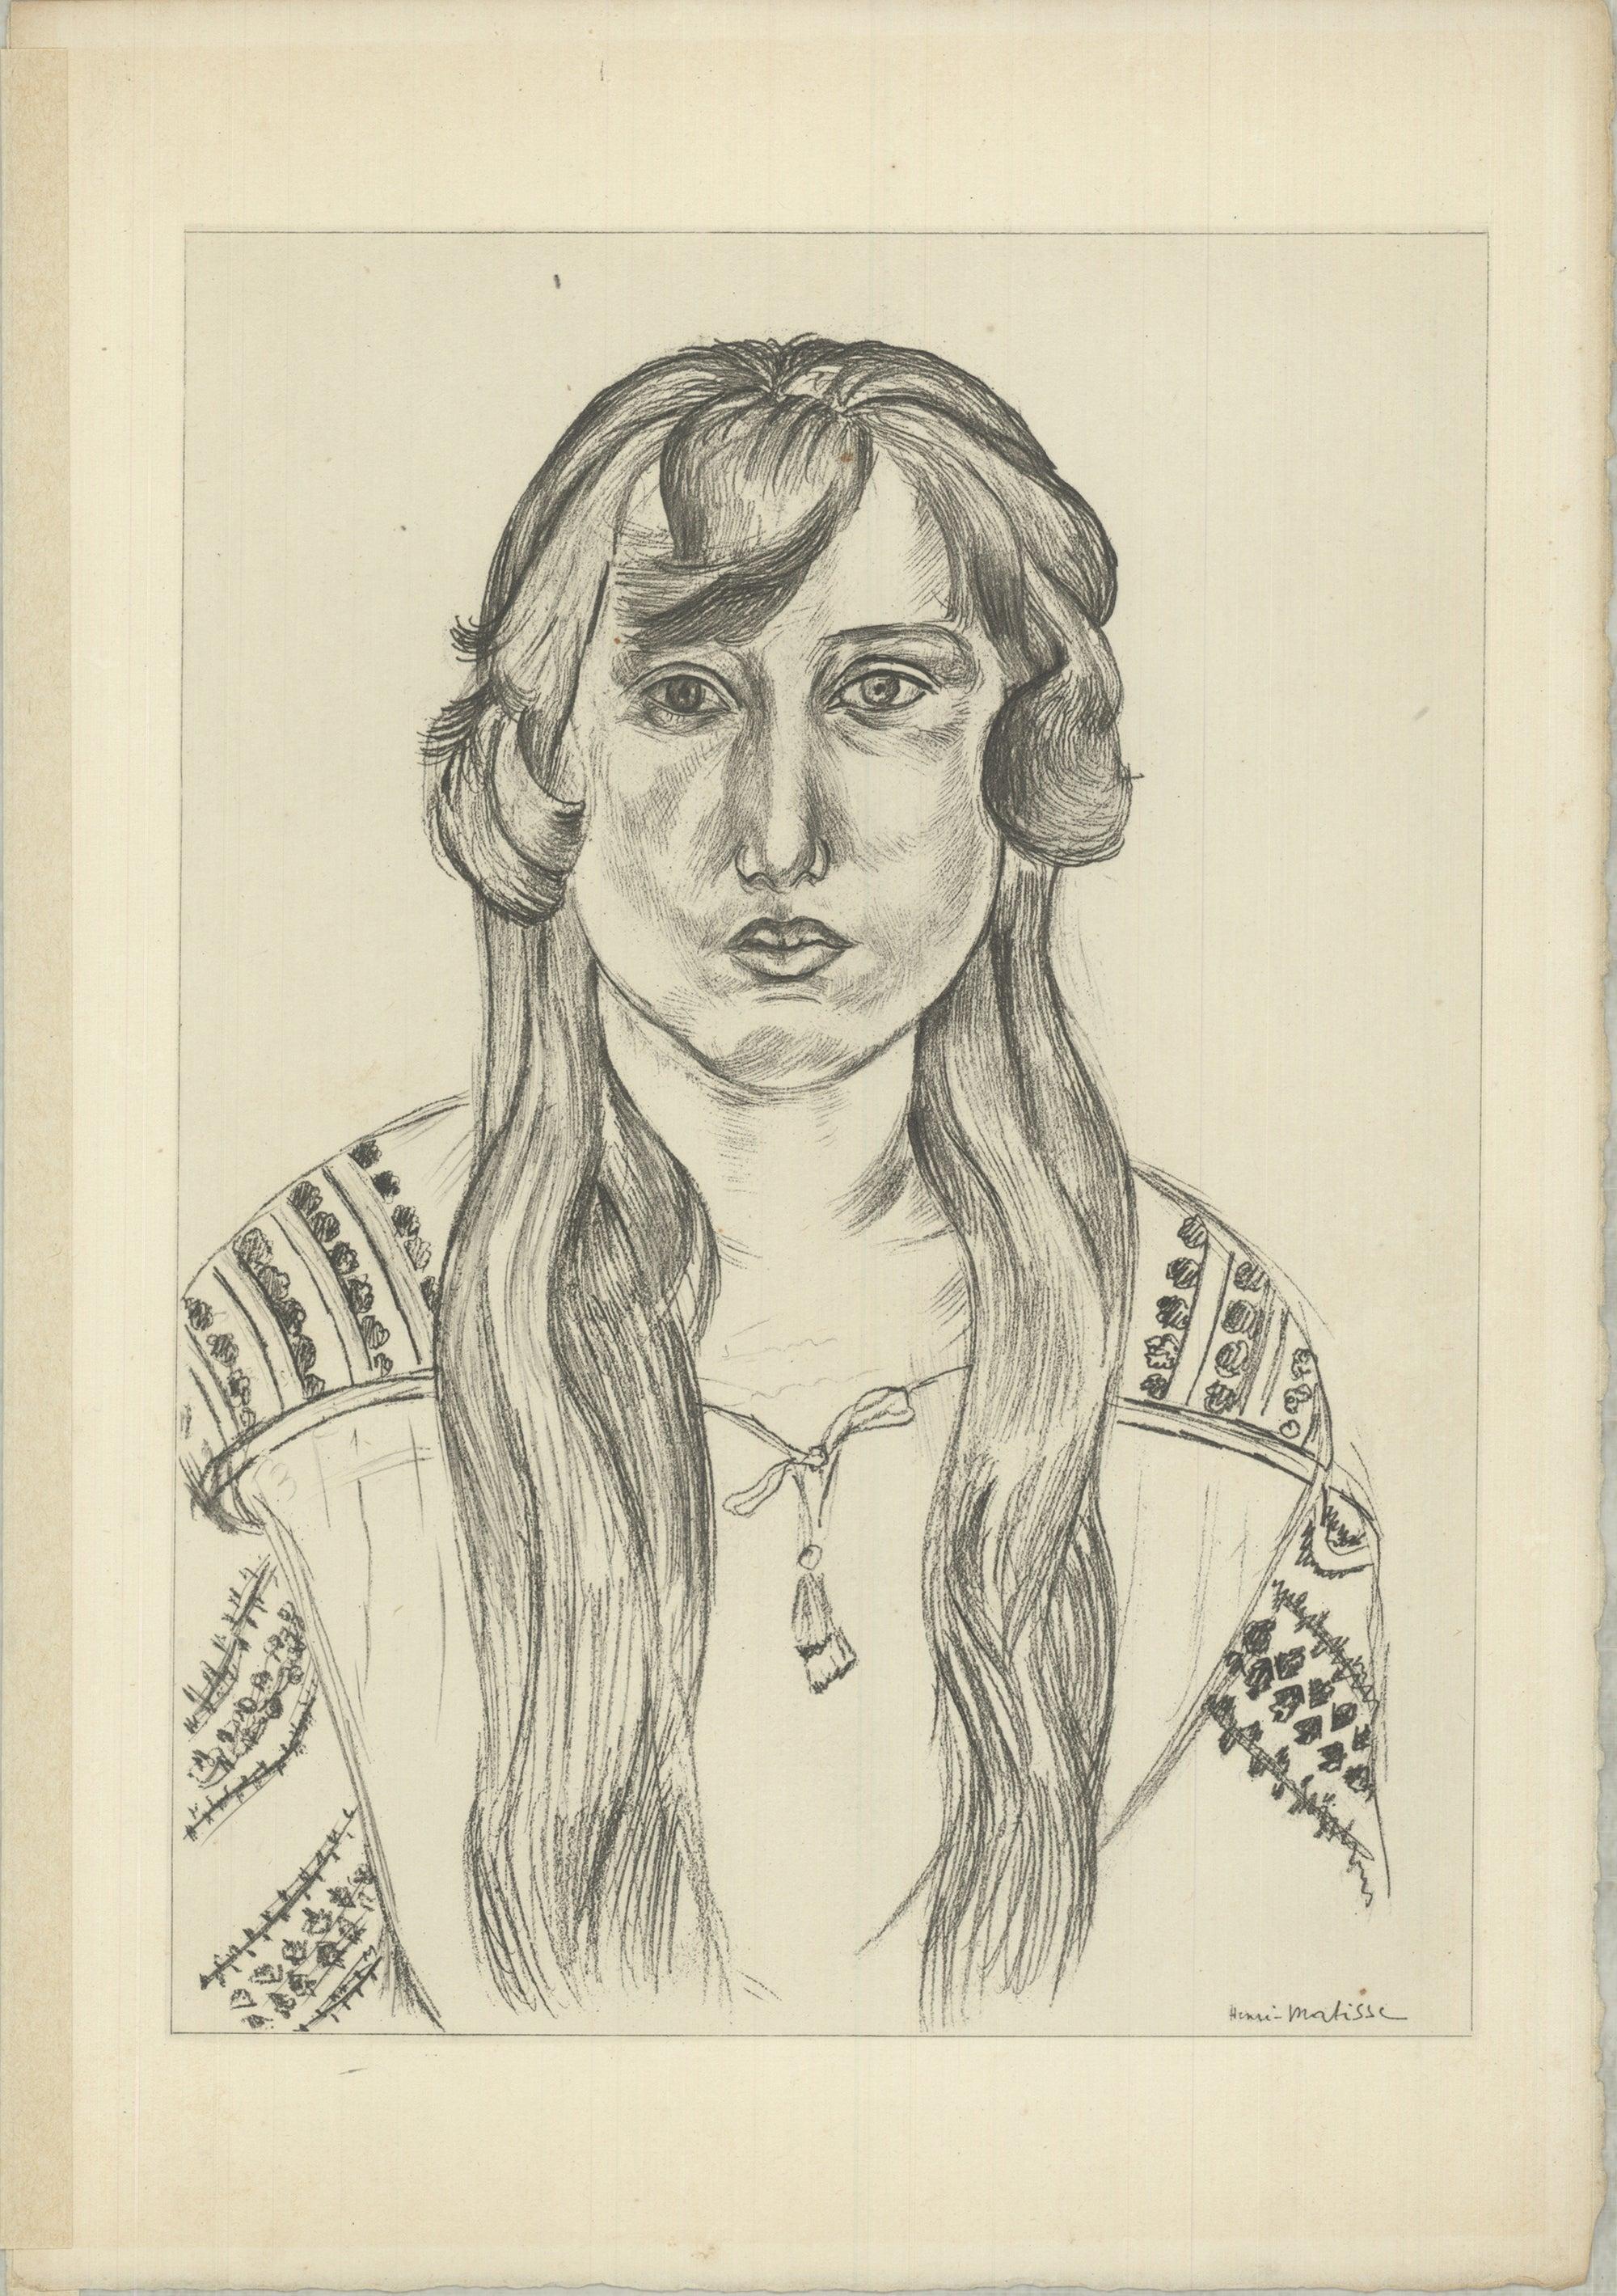 HENRI MATISSE Planche XL, 1920, Lithograph FIRST EDITION - Print by Henri Matisse